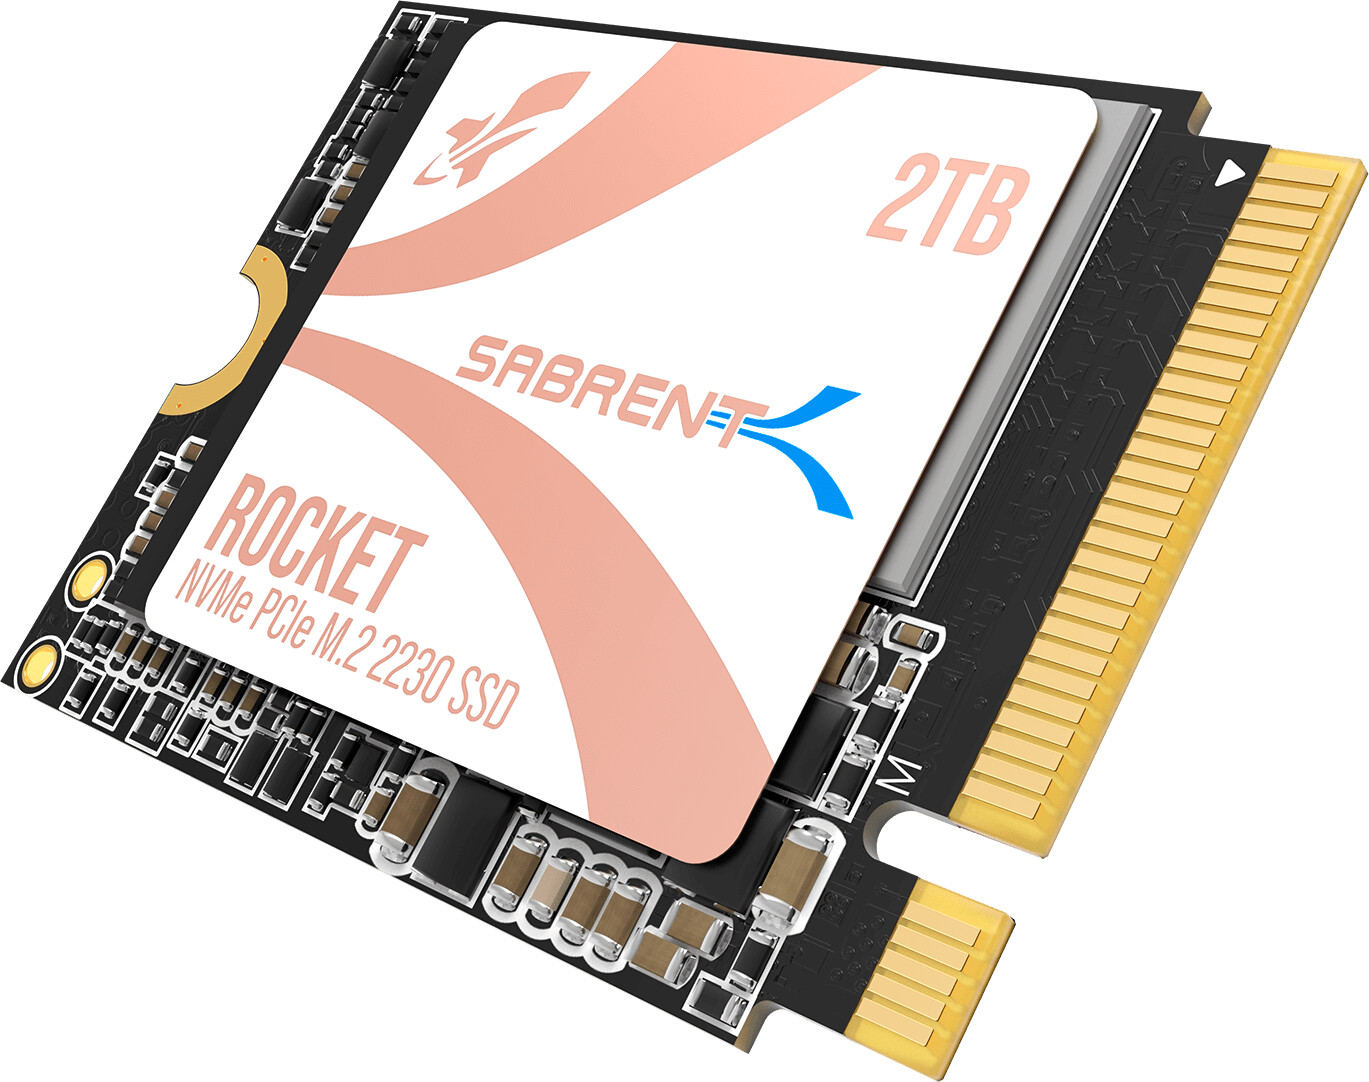 Sabrent Rocket Q4 PCIe 4.0 NVMe SSD 